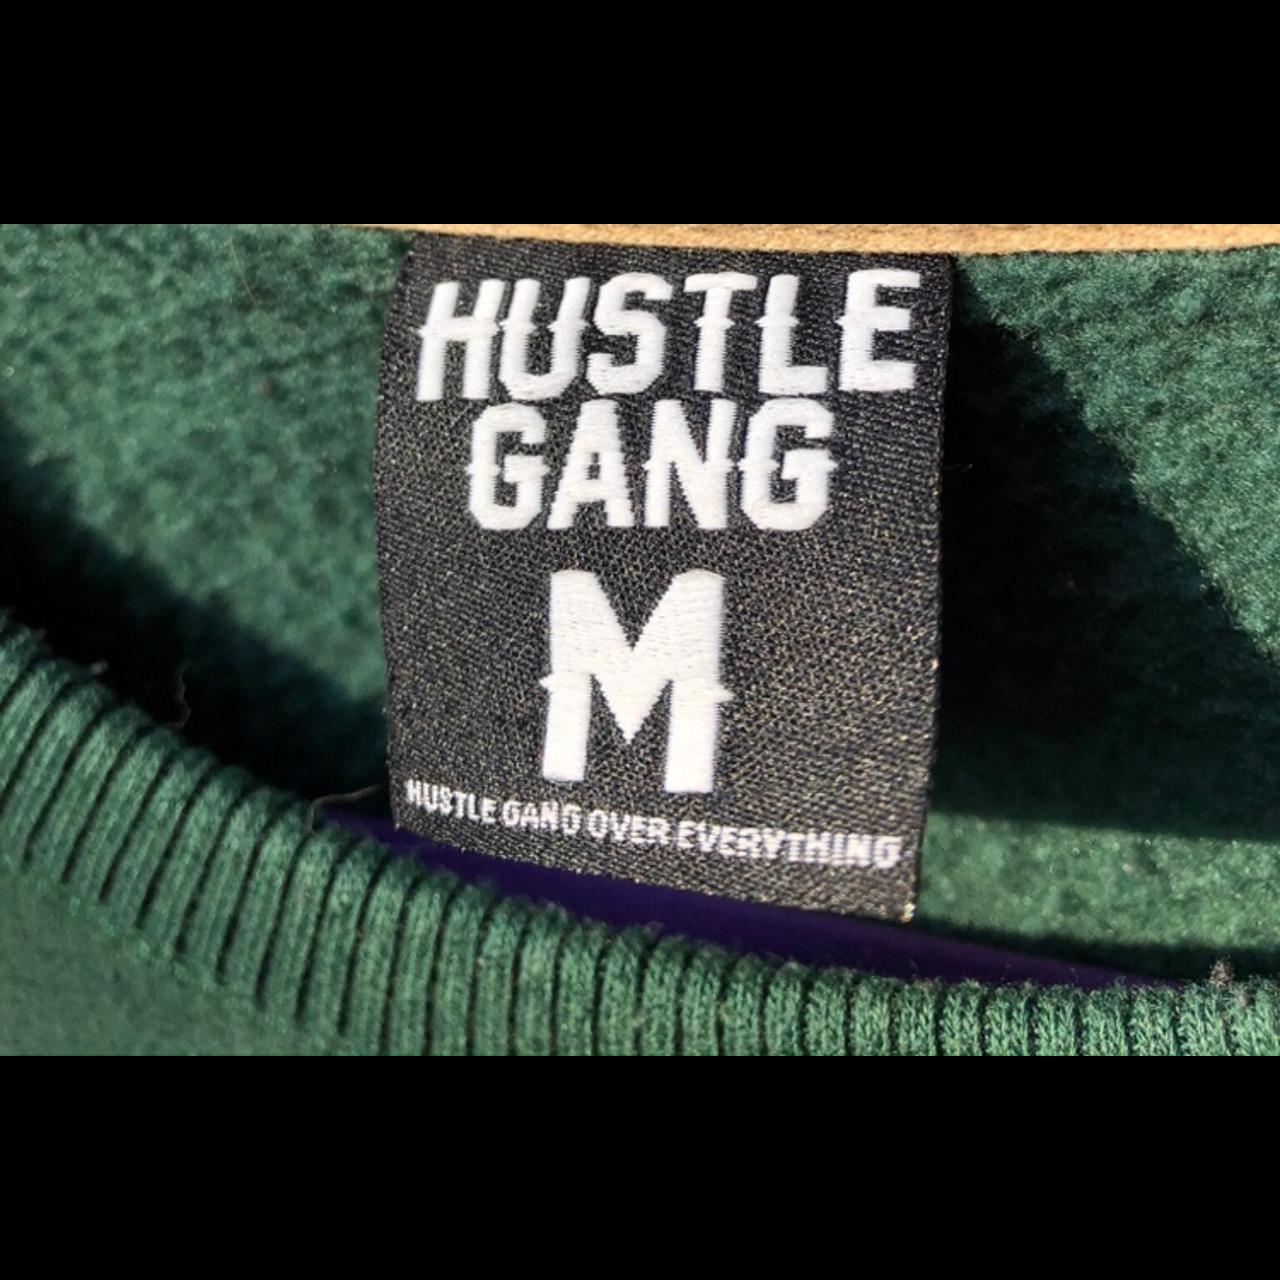 Men's Hoodies — Hustle Over Everything